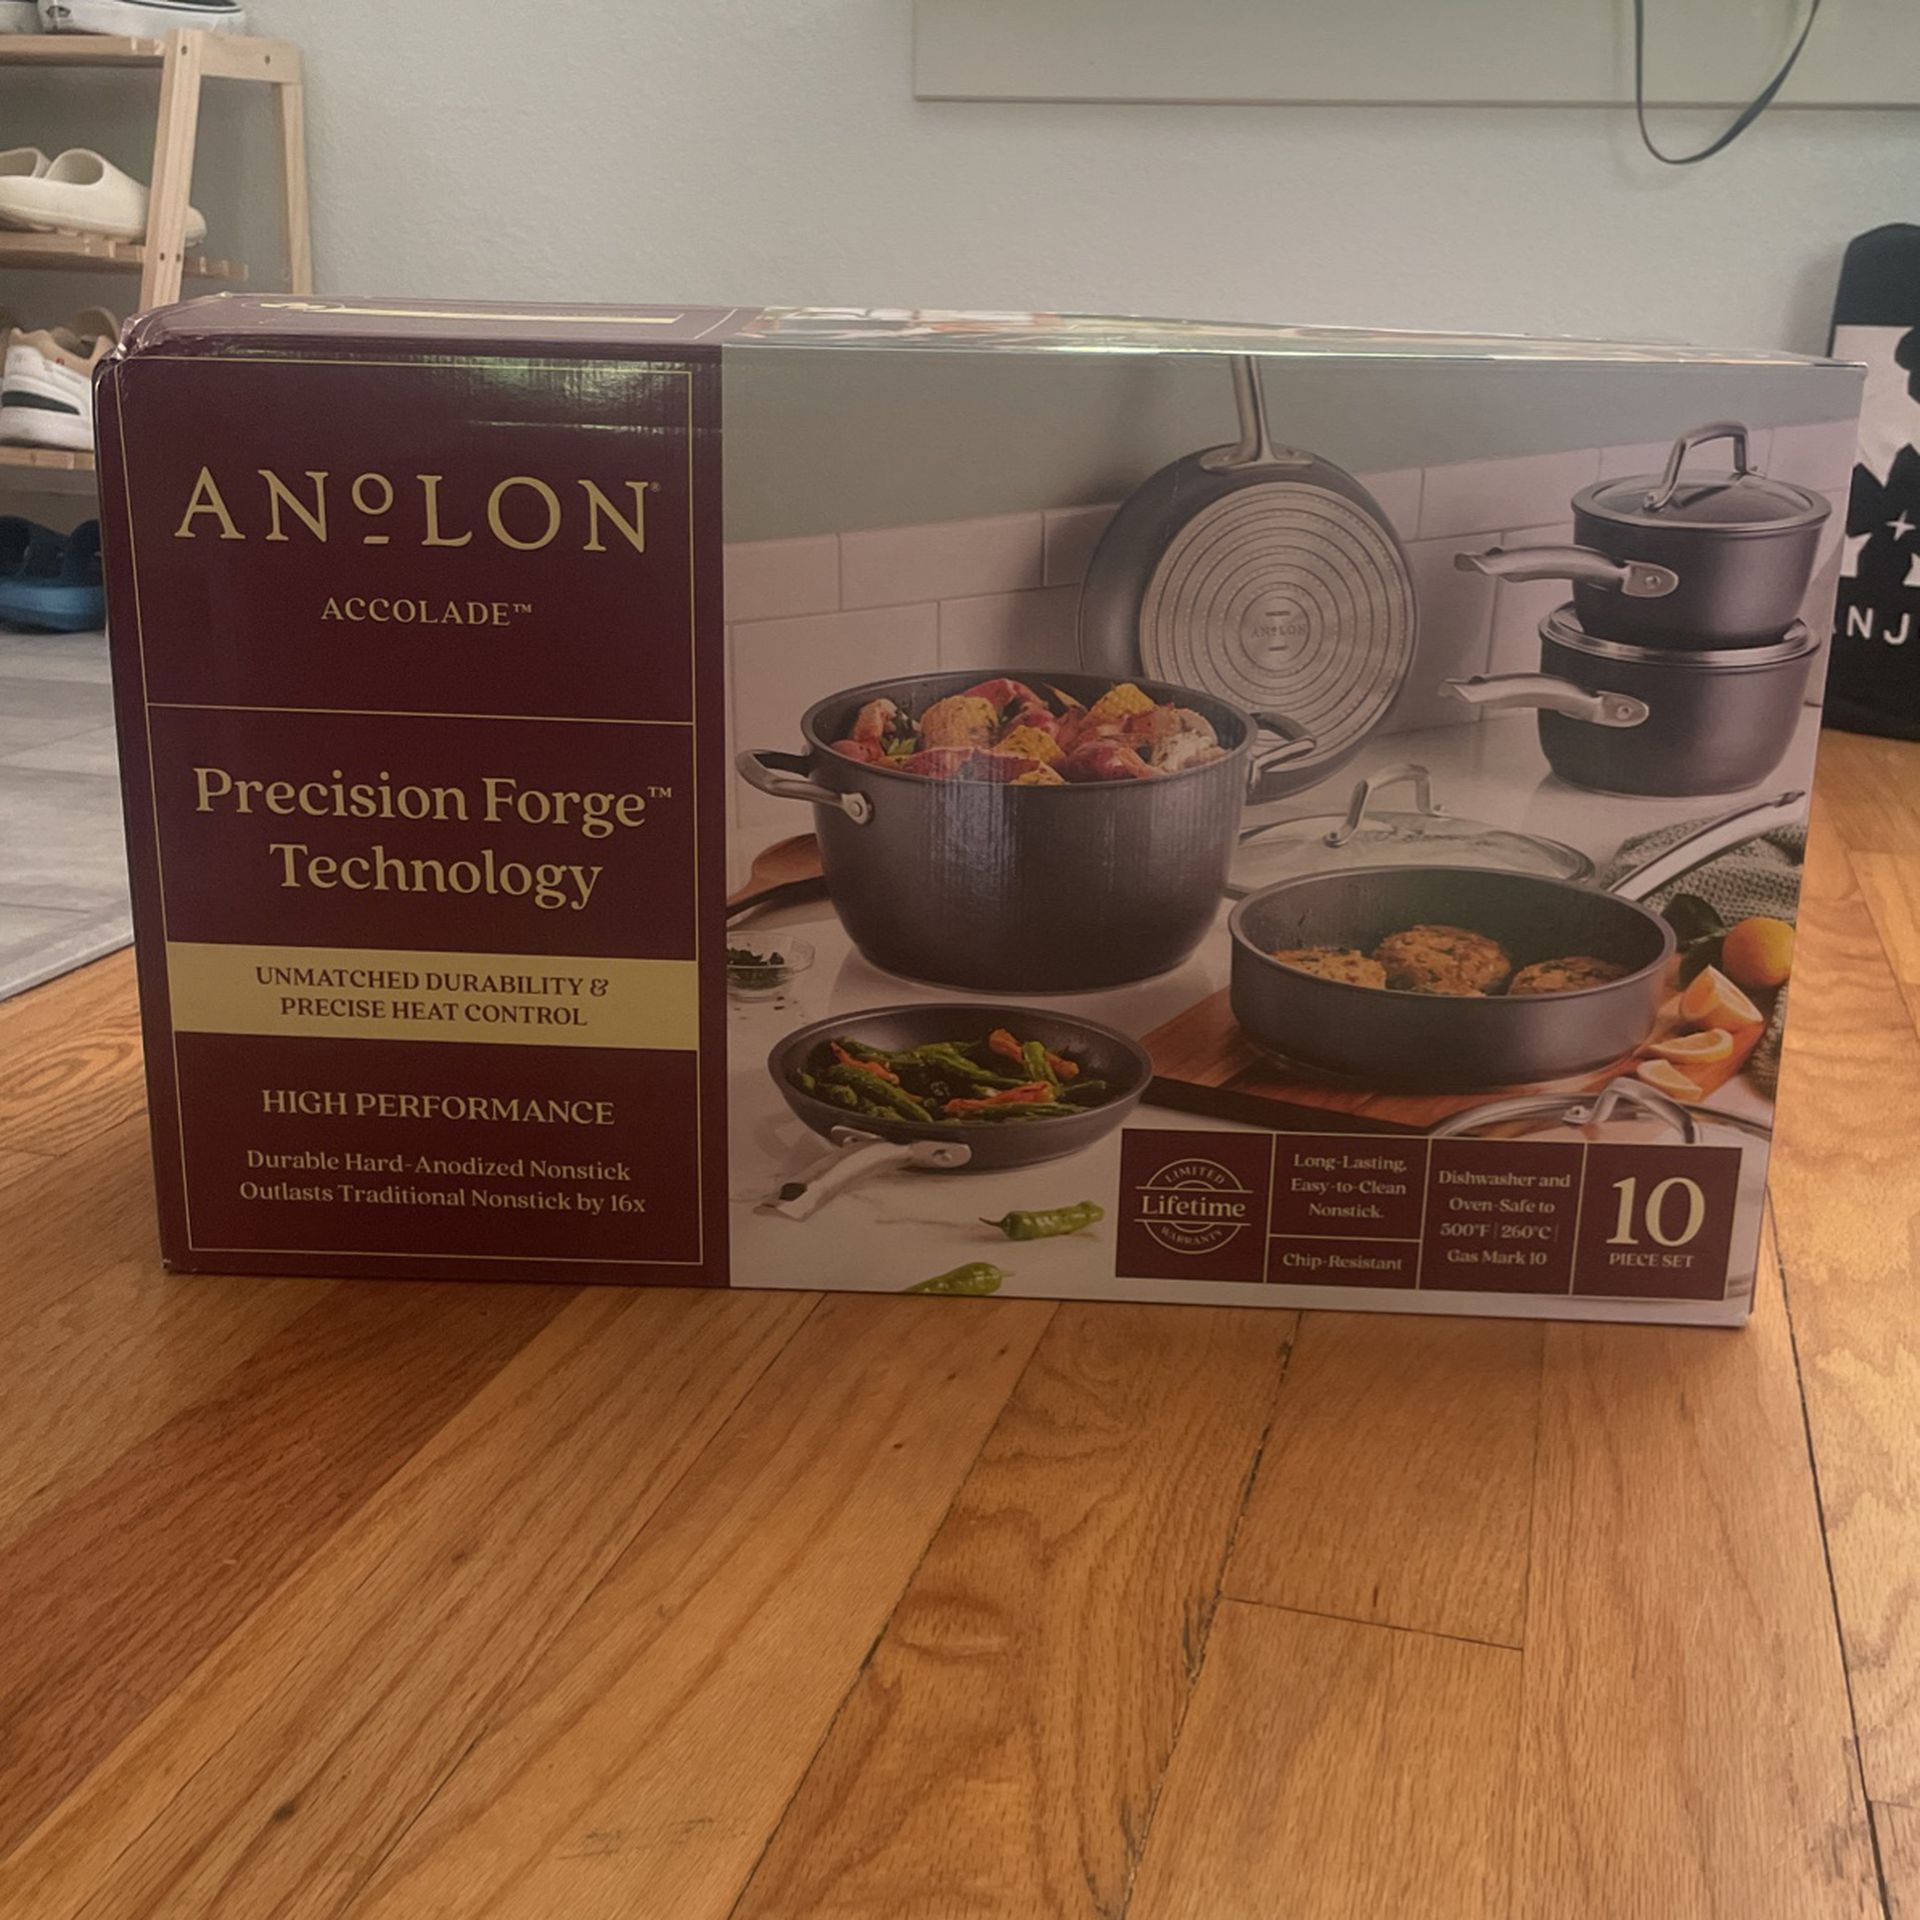 Anolon Accolade 10-Piece Cookware Set